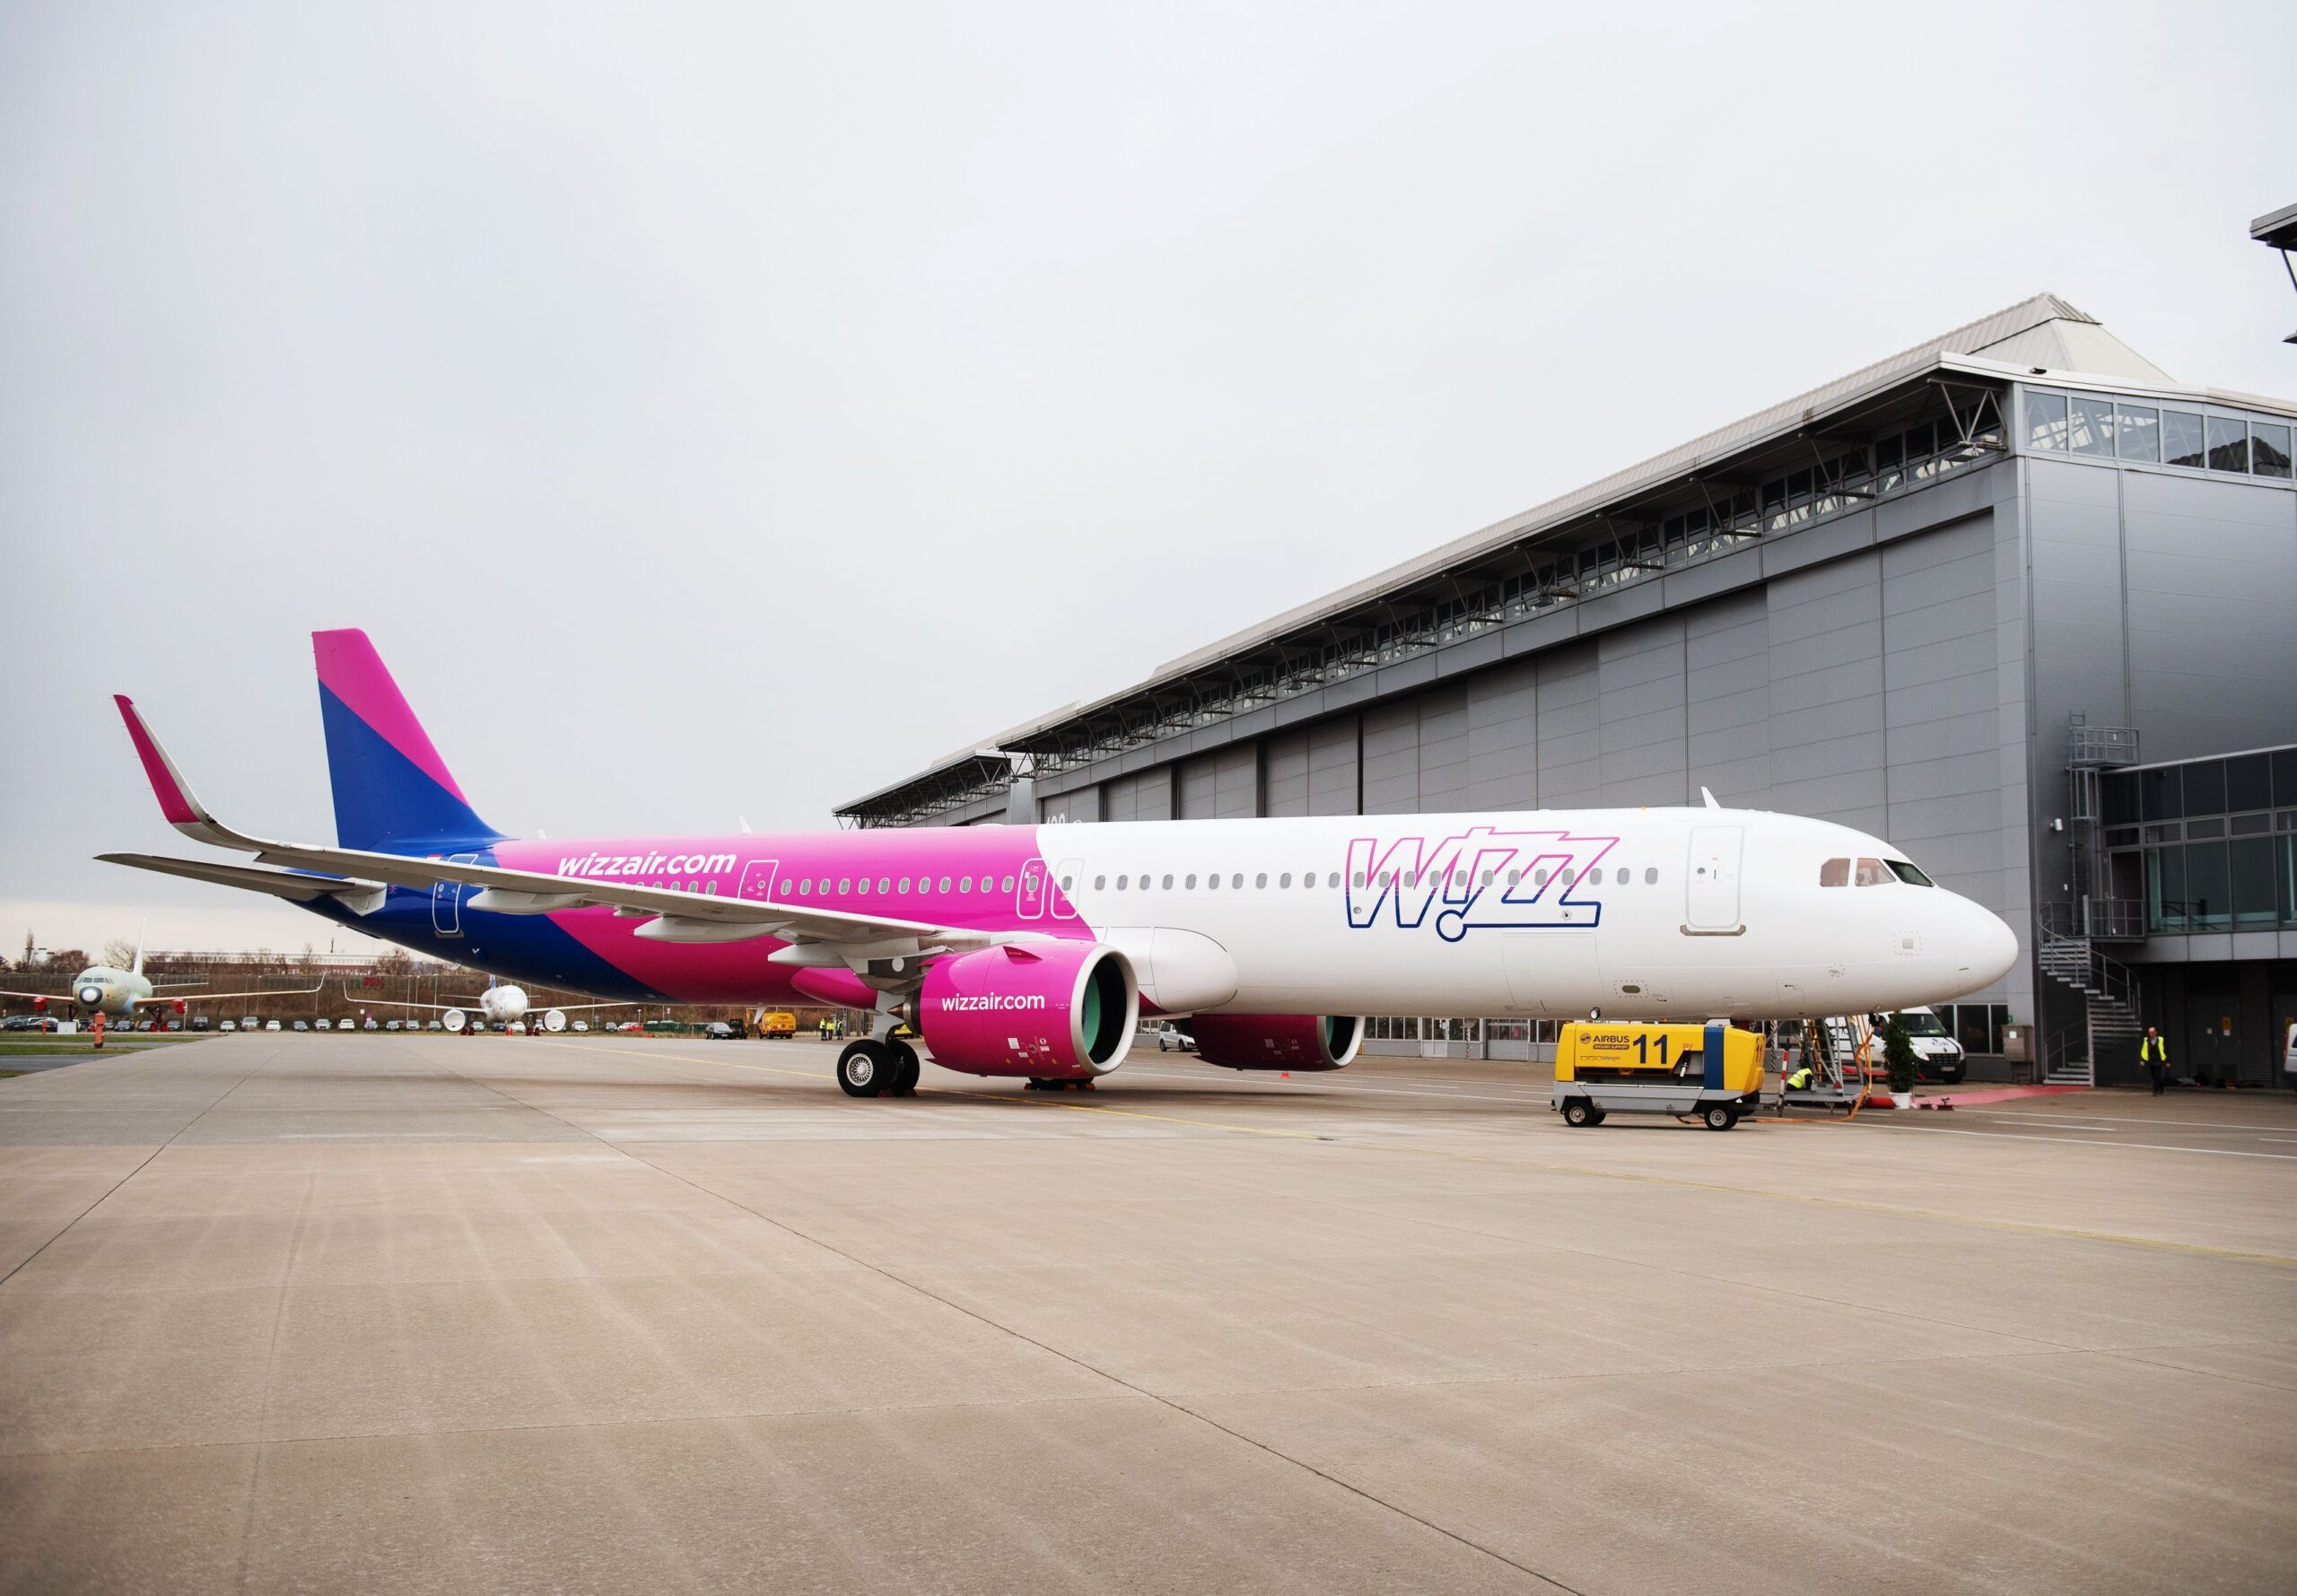 Wizz Air’s initial A321neo